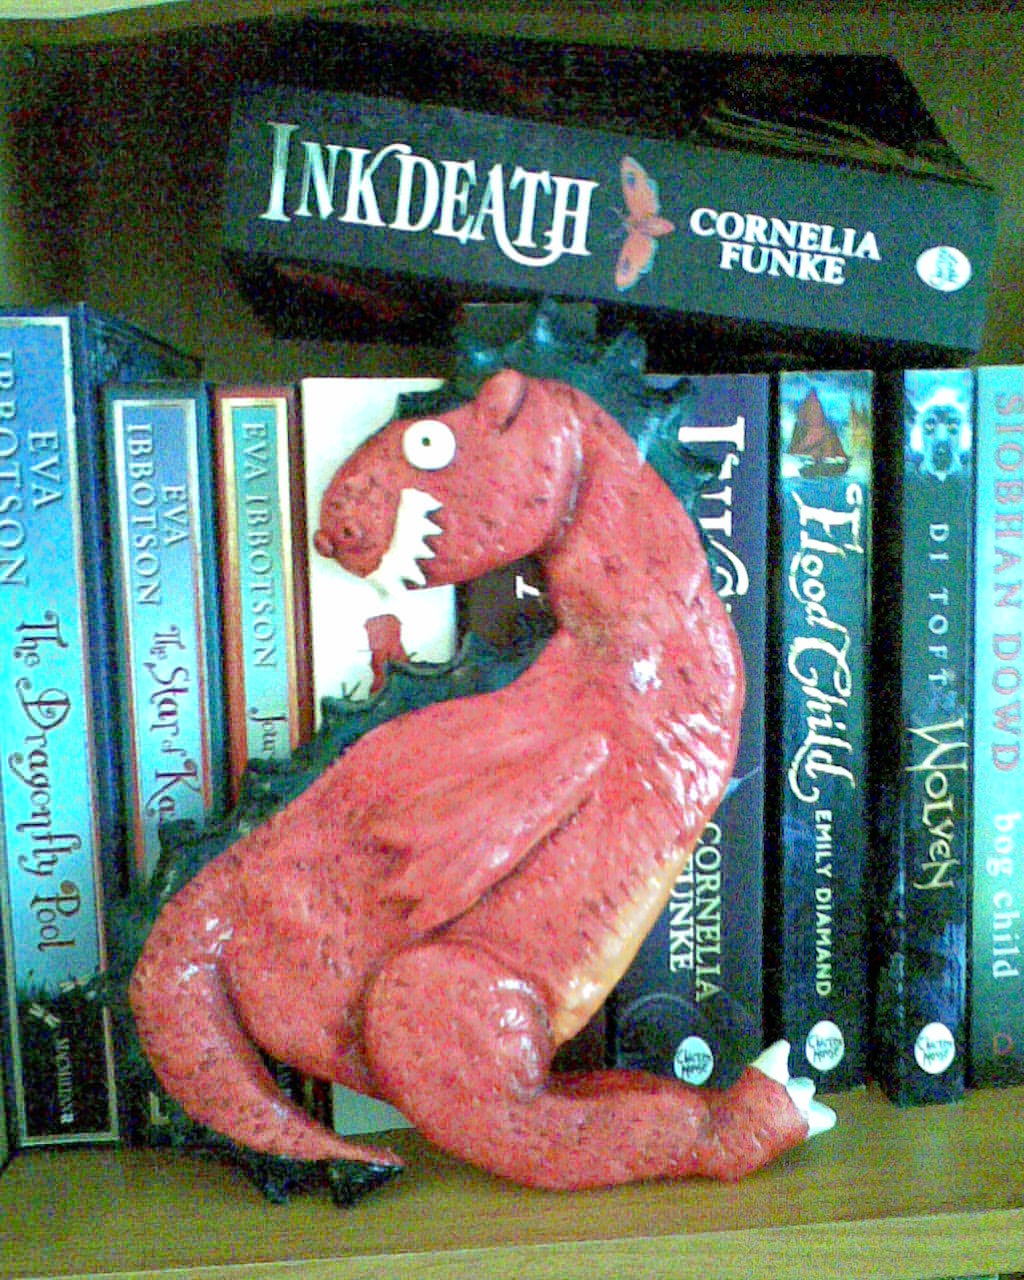 Photo of dough dragon and books on shelf